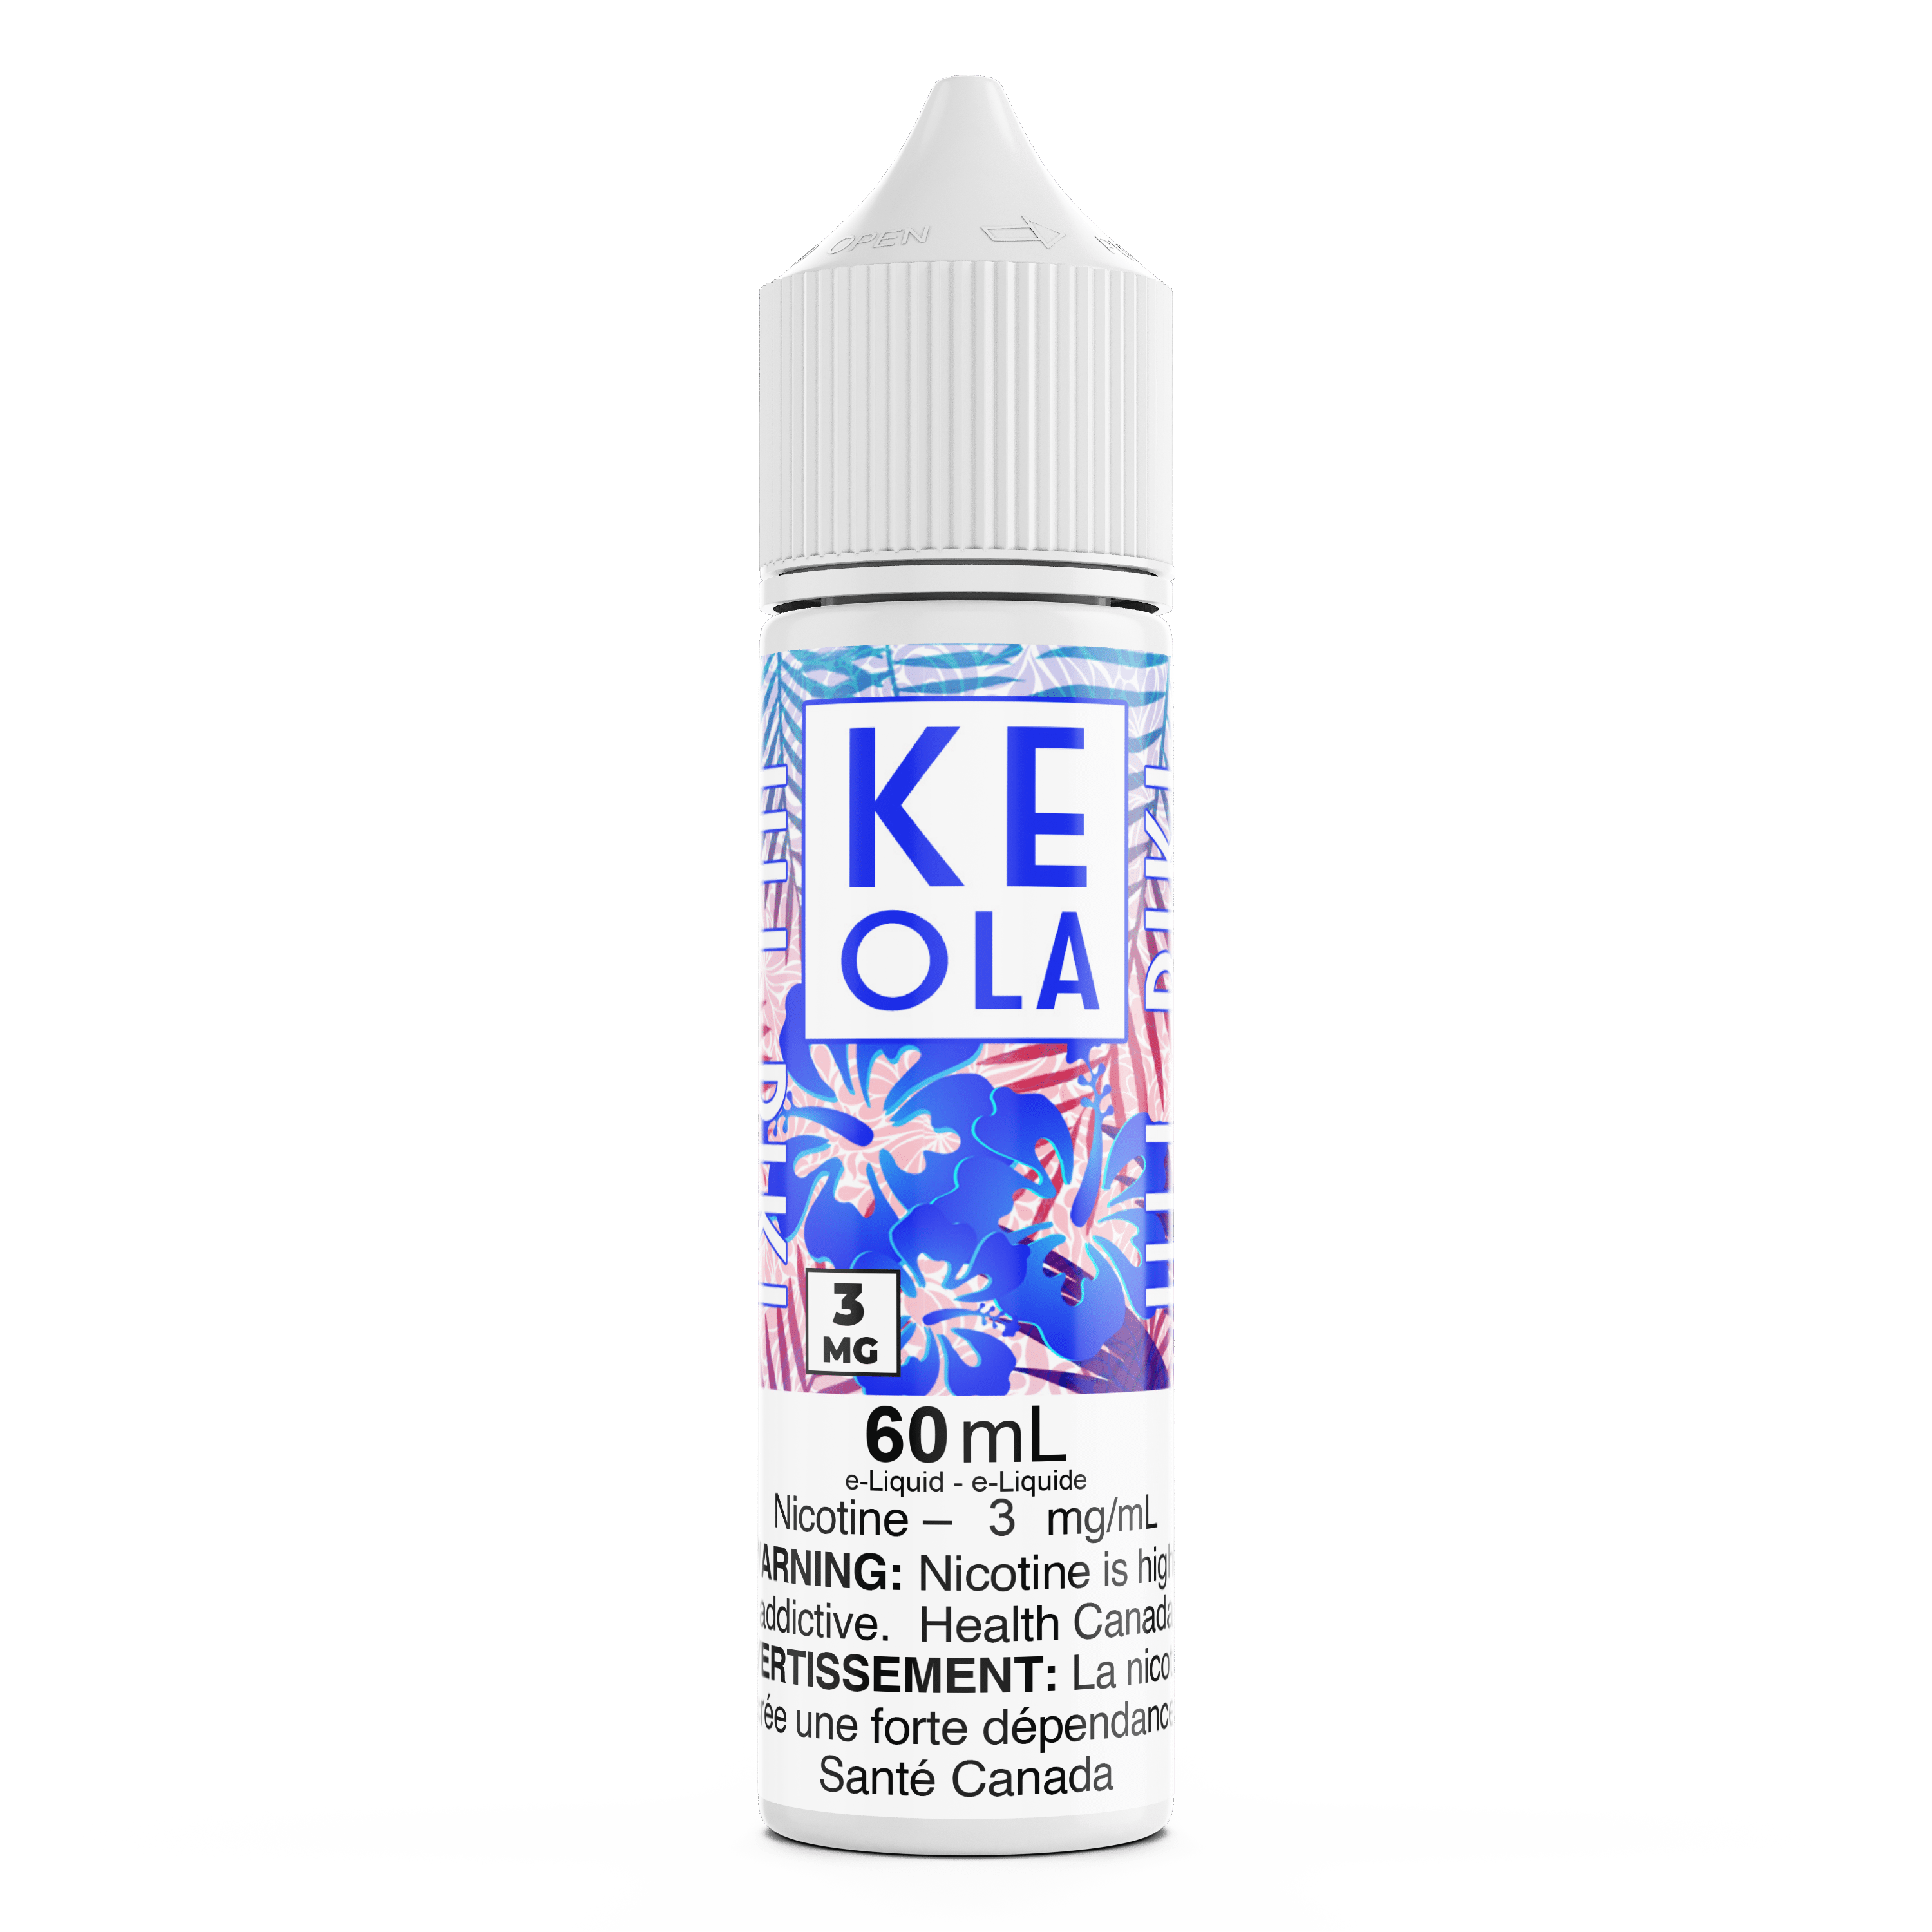 KEOLA - ULI PIKI E-Liquid available on Canada online vape shop